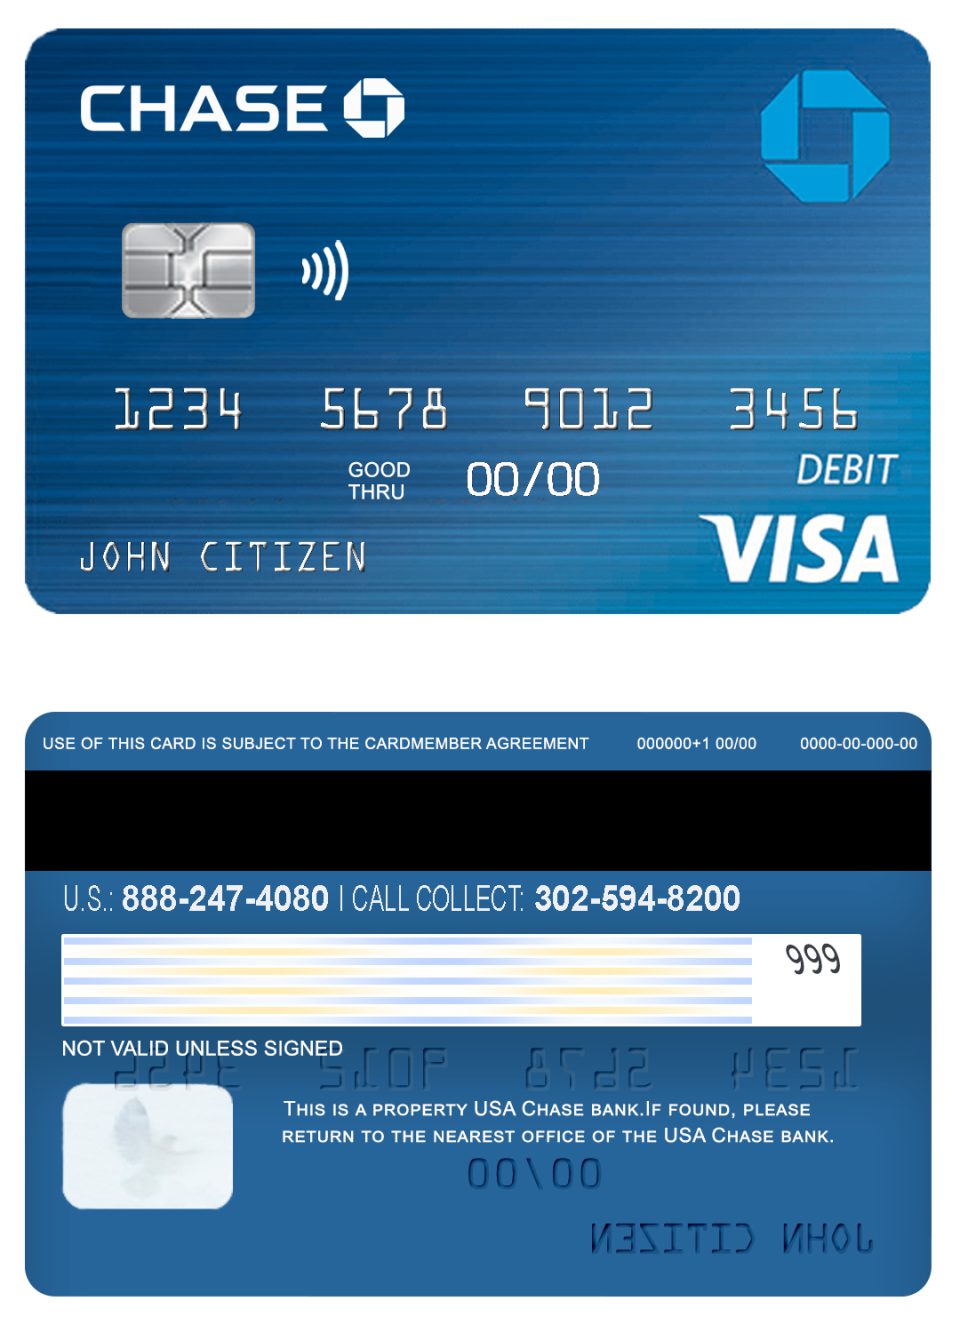 Editable USA Chase bank Visa Debit Card Templates in PSD Format (version 2)